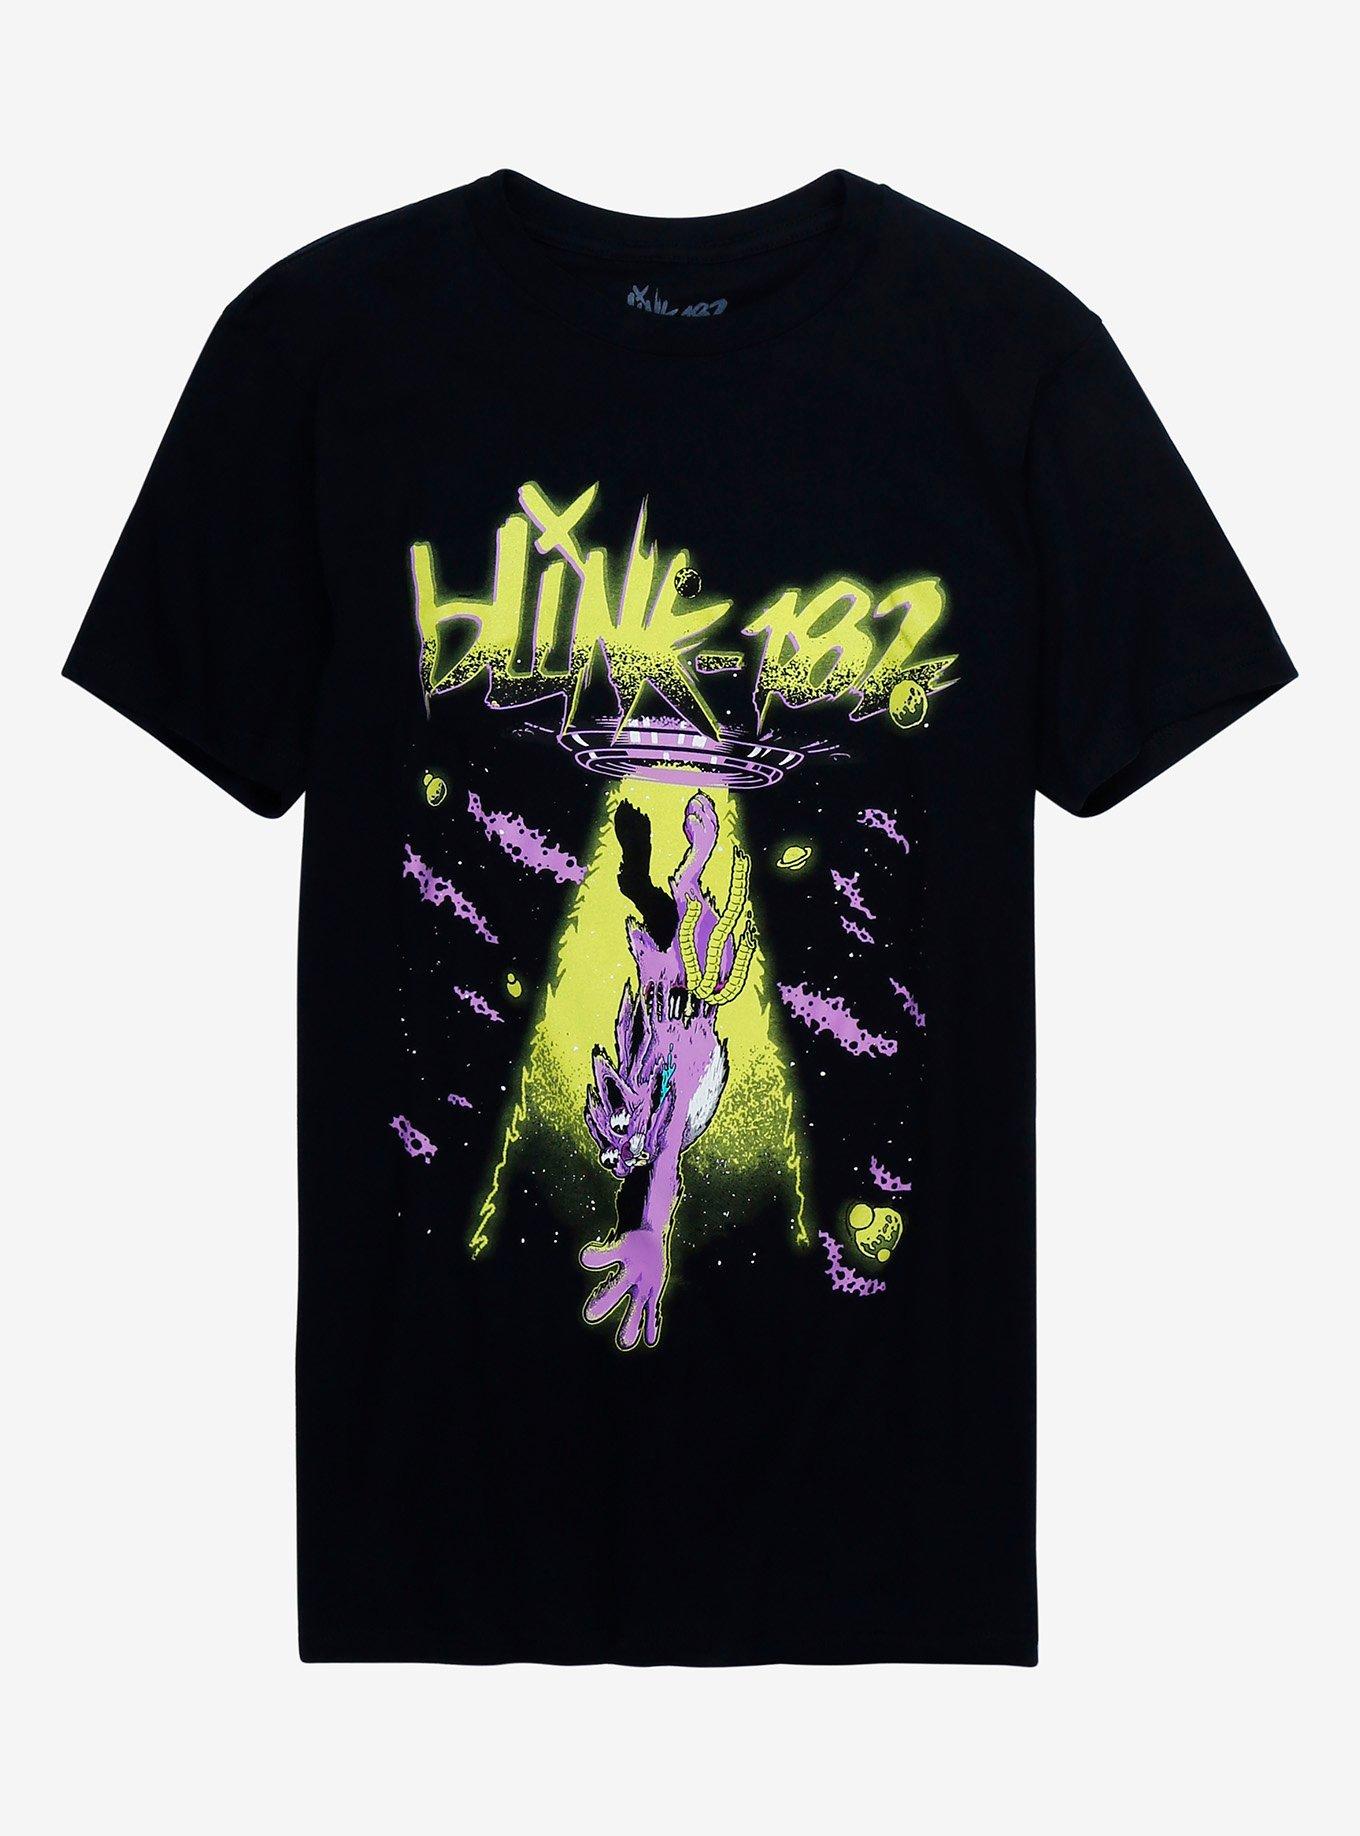 Blink-182 Aliens Exist T-Shirt, BLACK, hi-res